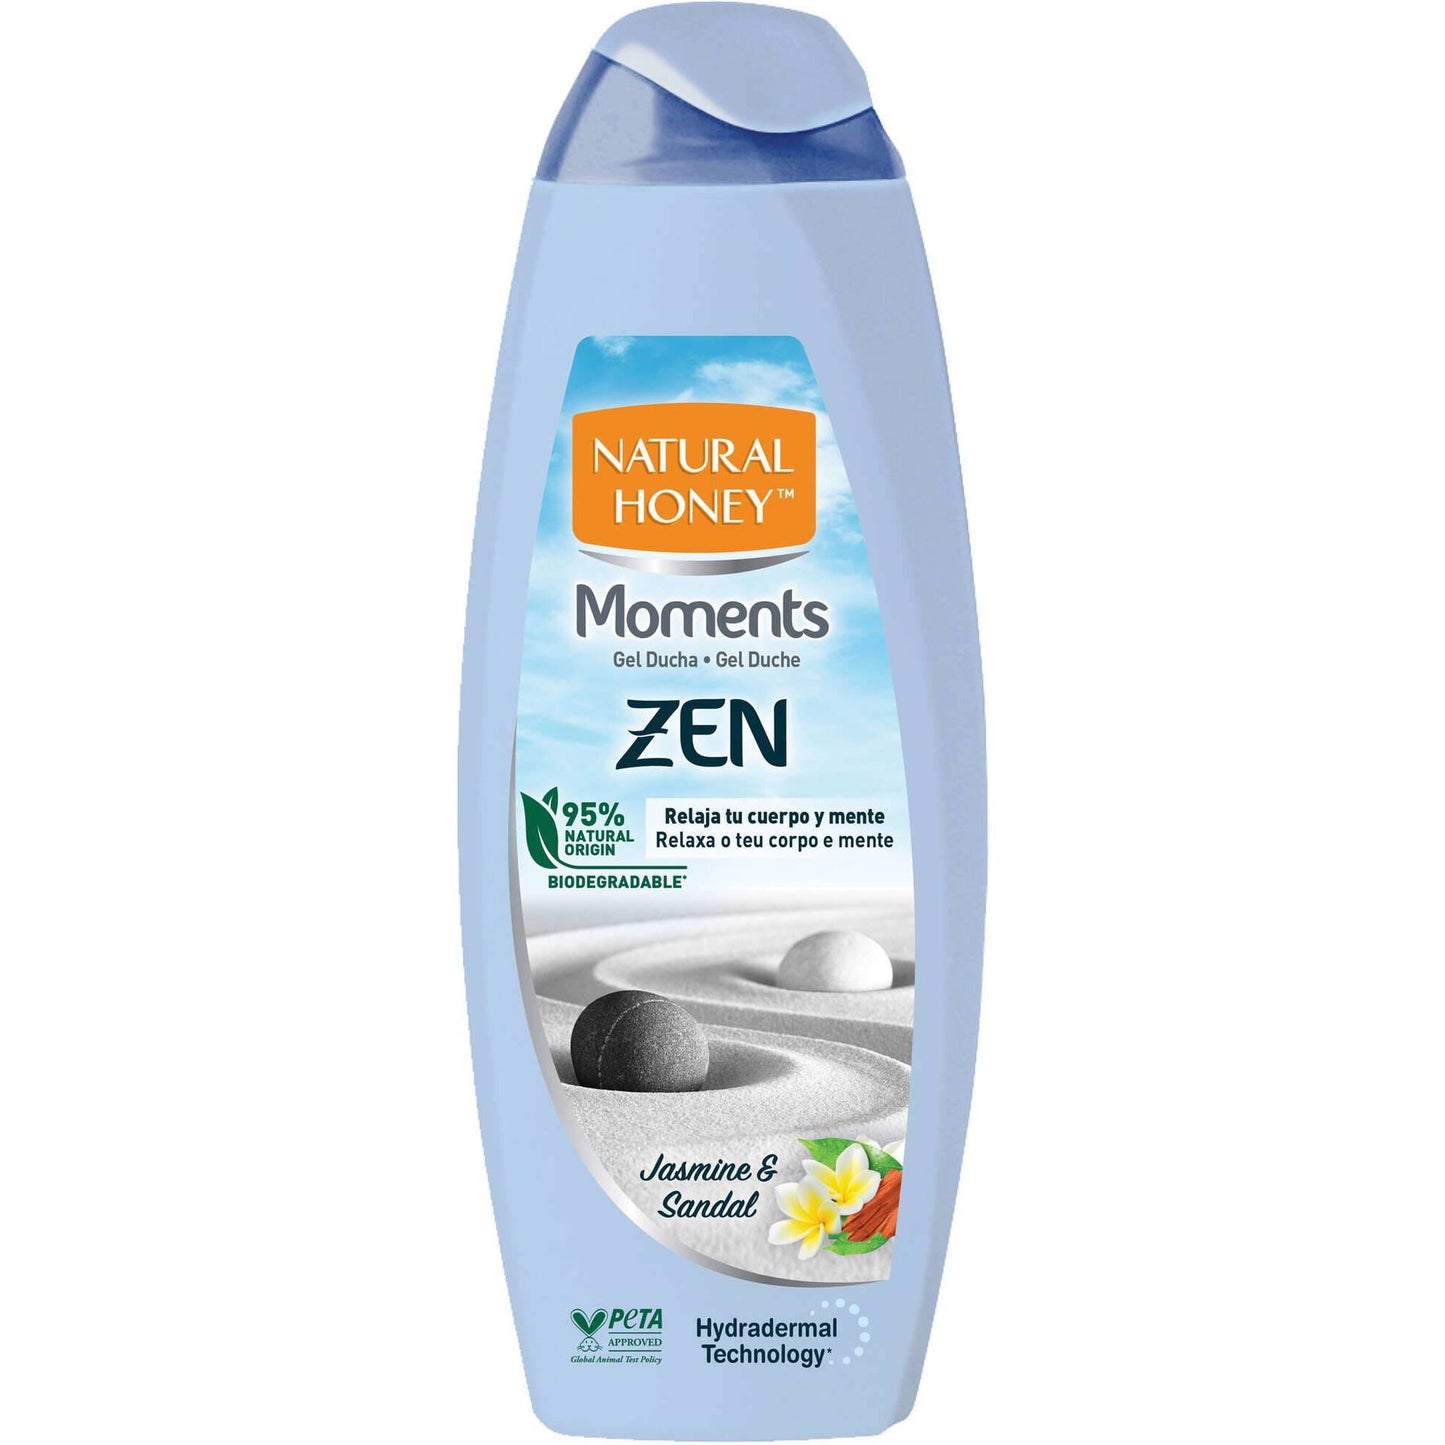 Moments Zen Shower Gel Natural Honey 600 ml